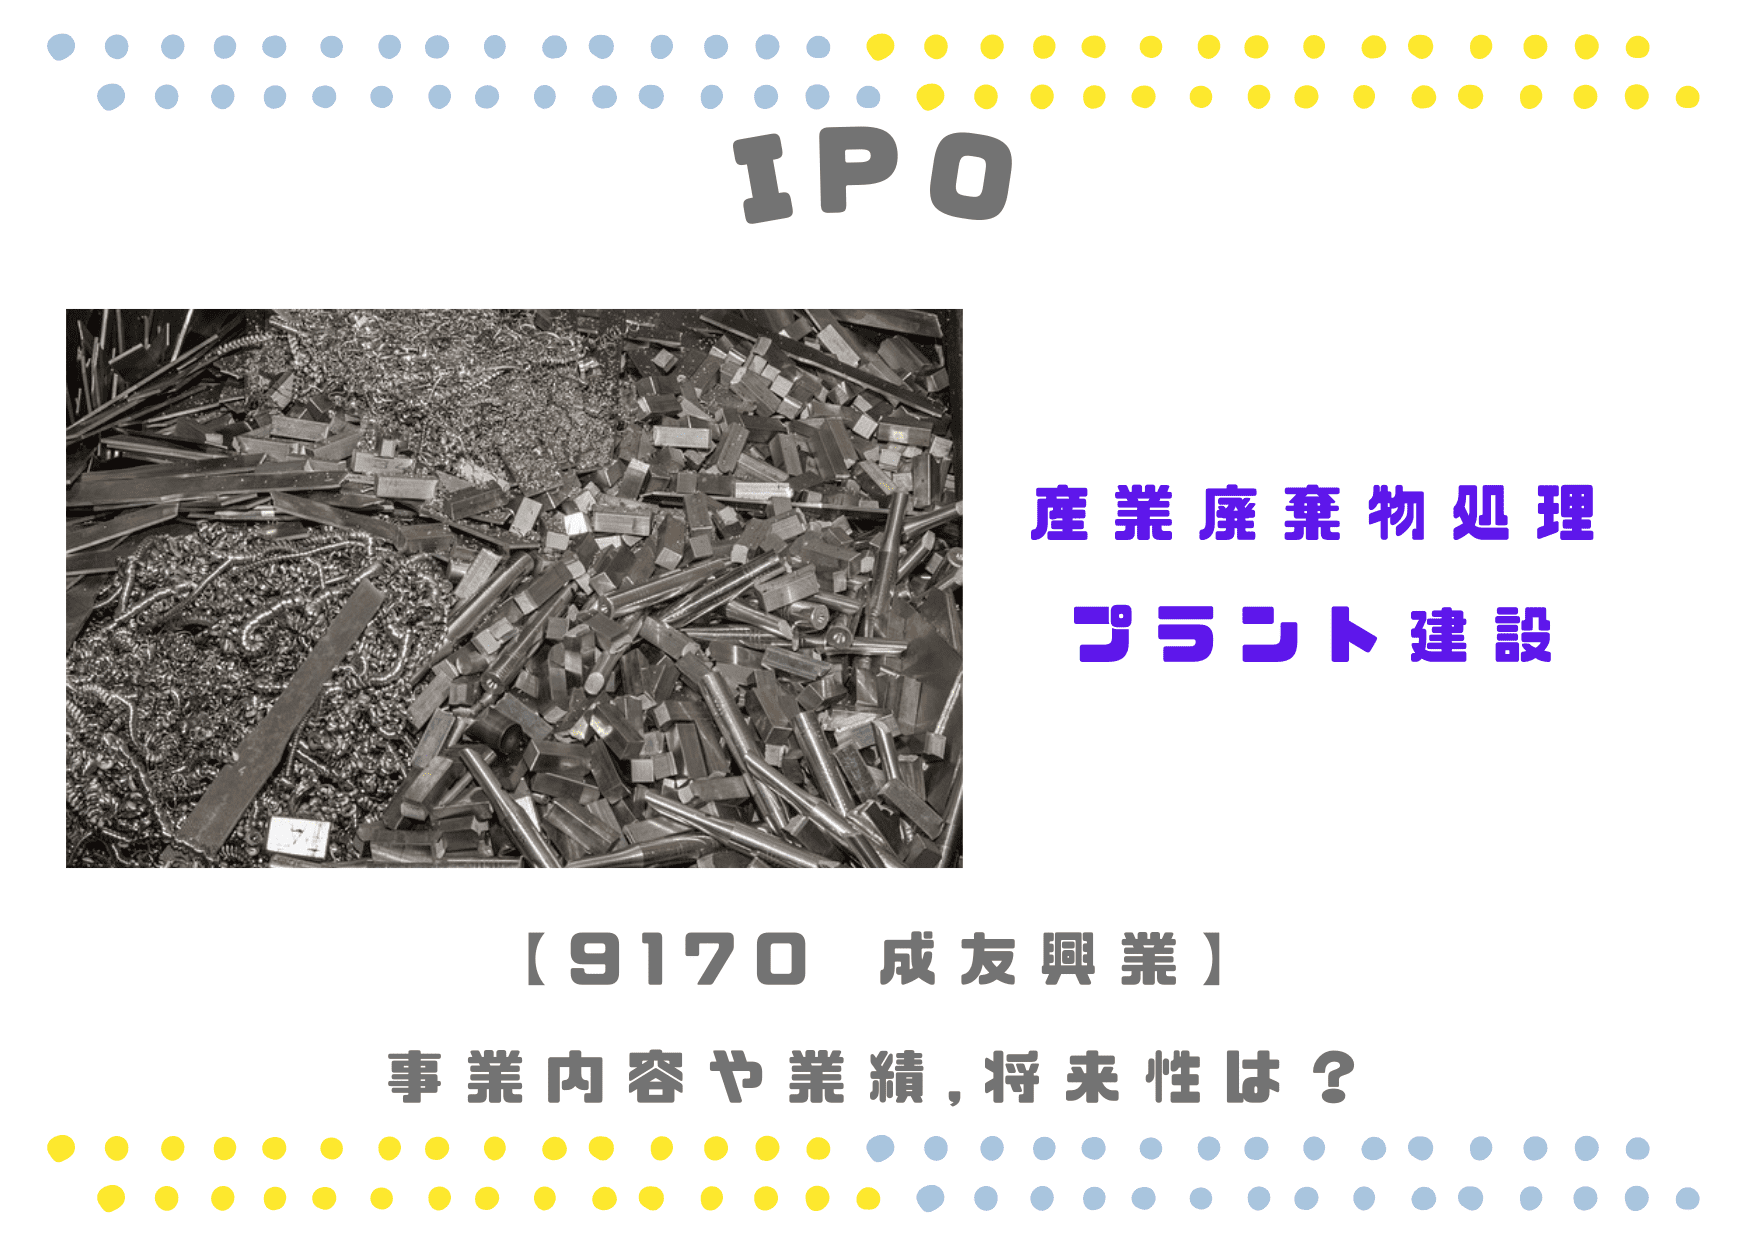 【産廃処理・建設関連】IPO 9170 成友興業の業績,事業内容、将来性は？